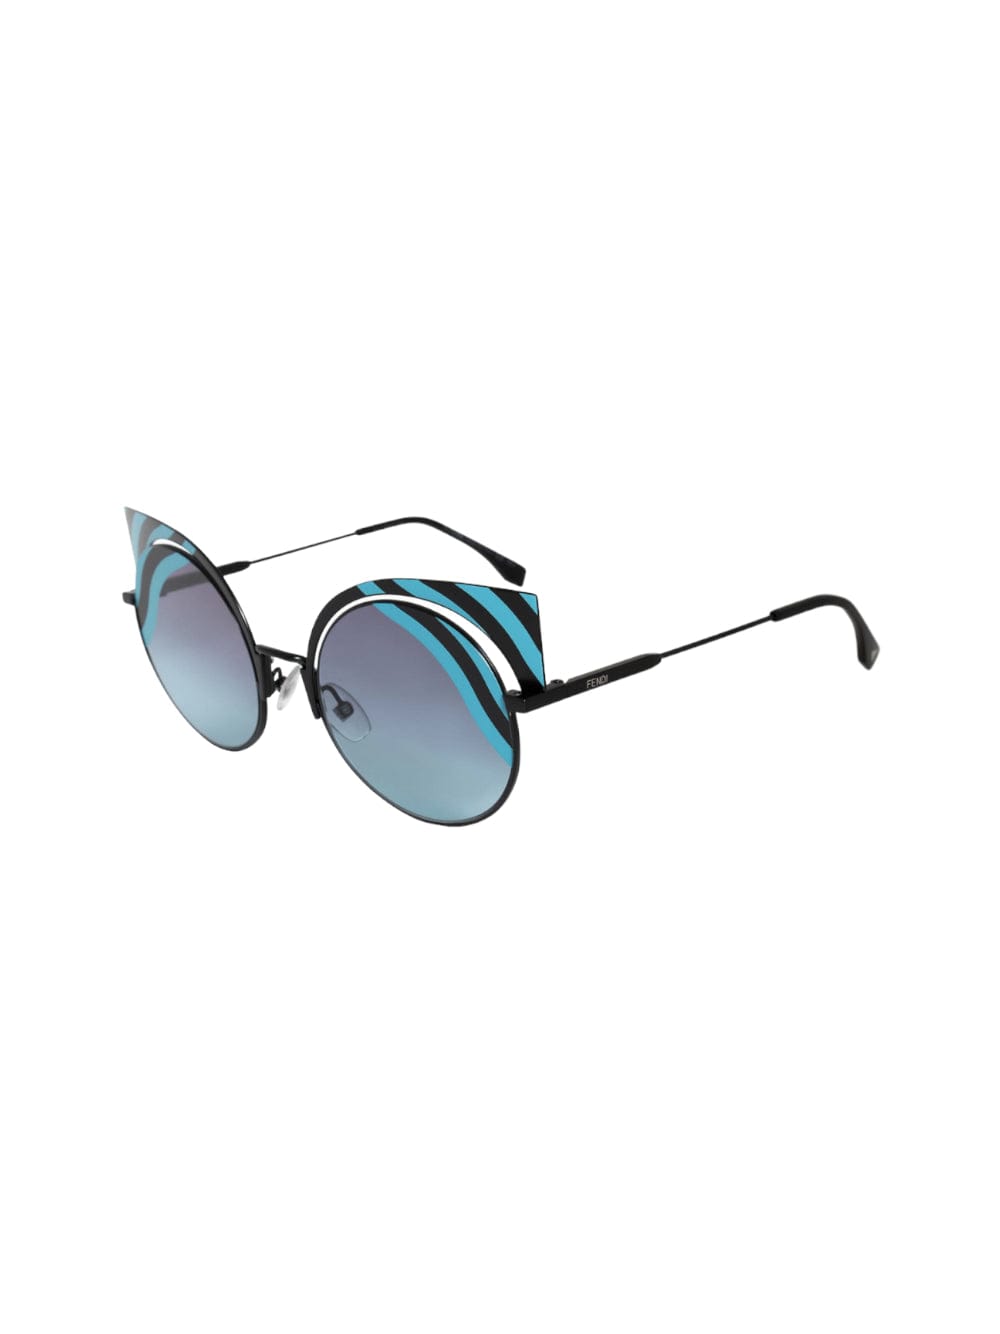 Fendi Eyewear Ff 0215 - Blue & Light Blue Sunglasses